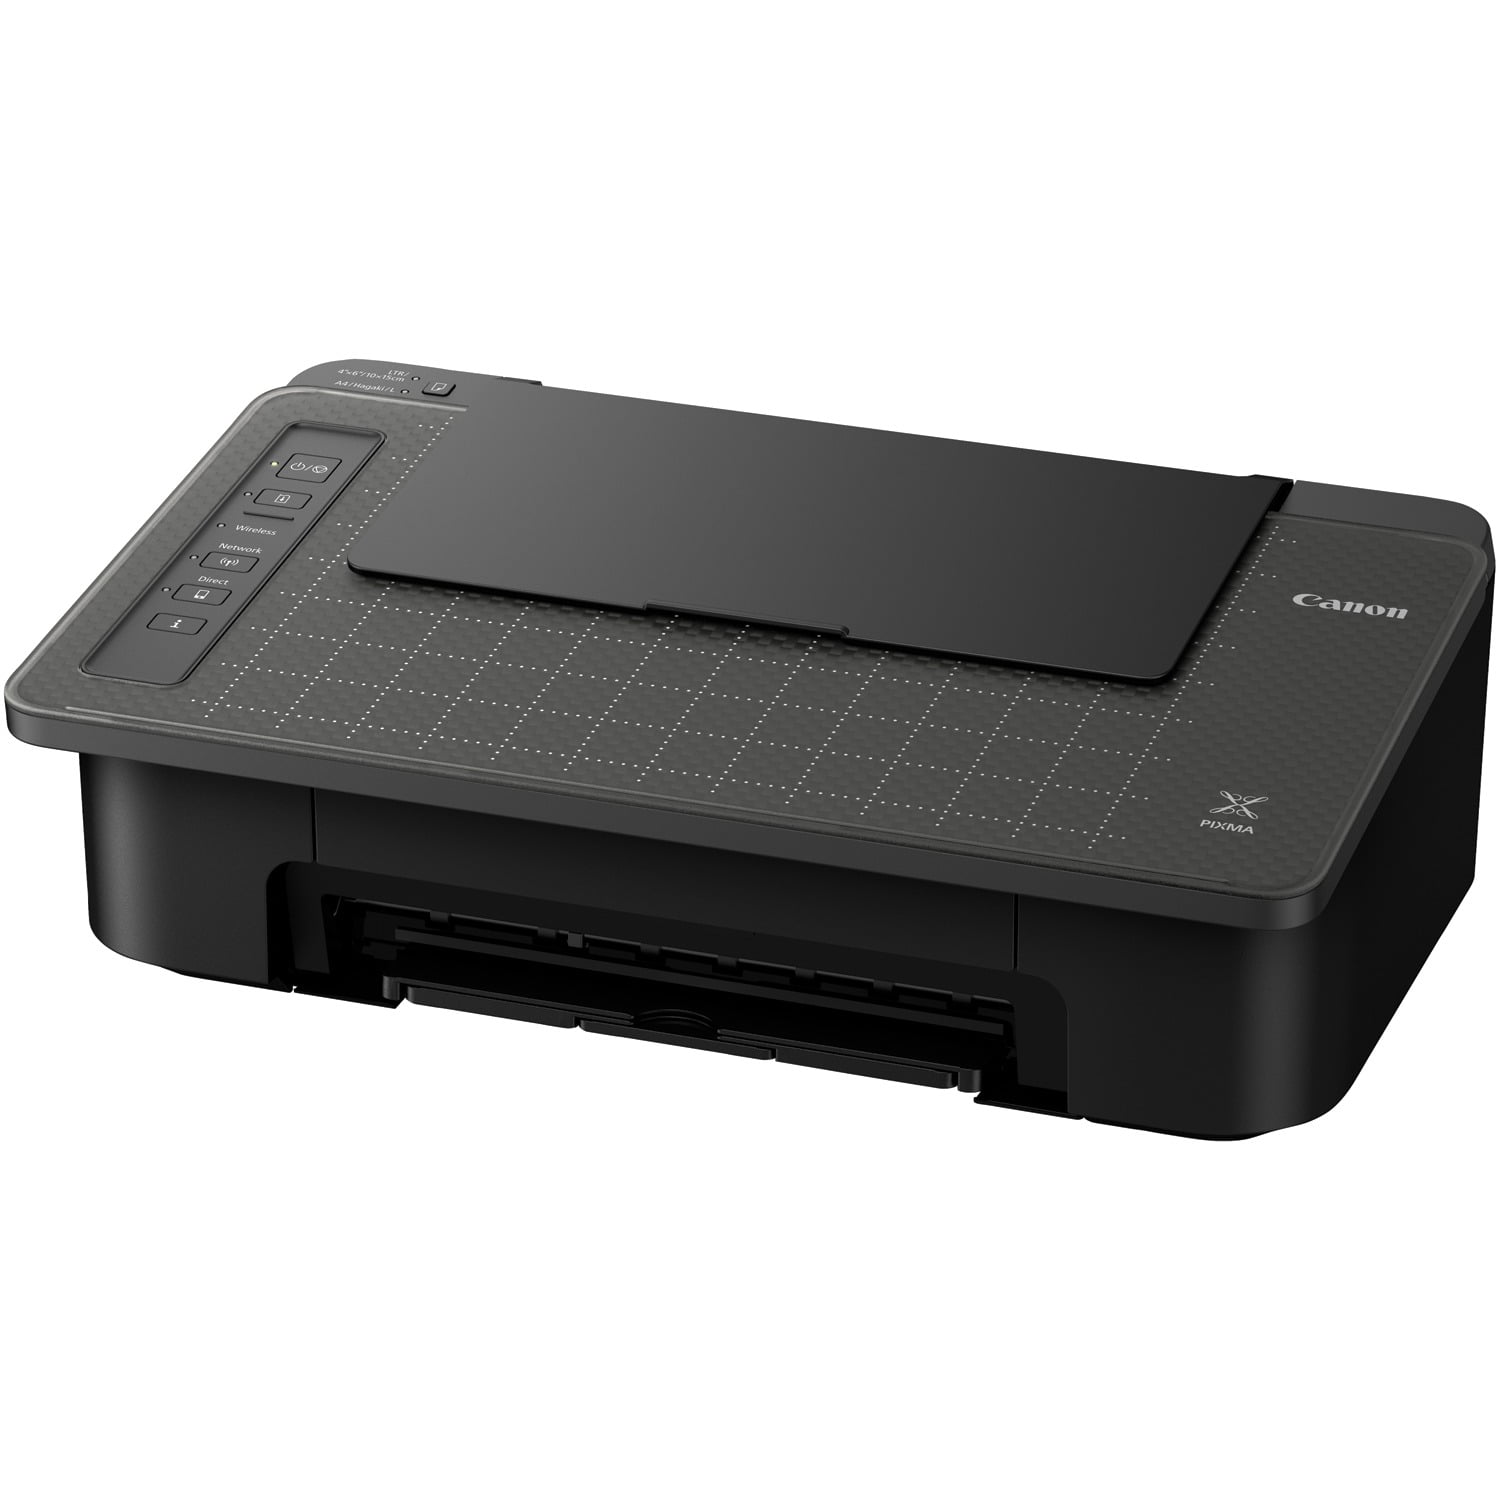 Canon TS302 Wireless Inkjet Printer Black 2321C002